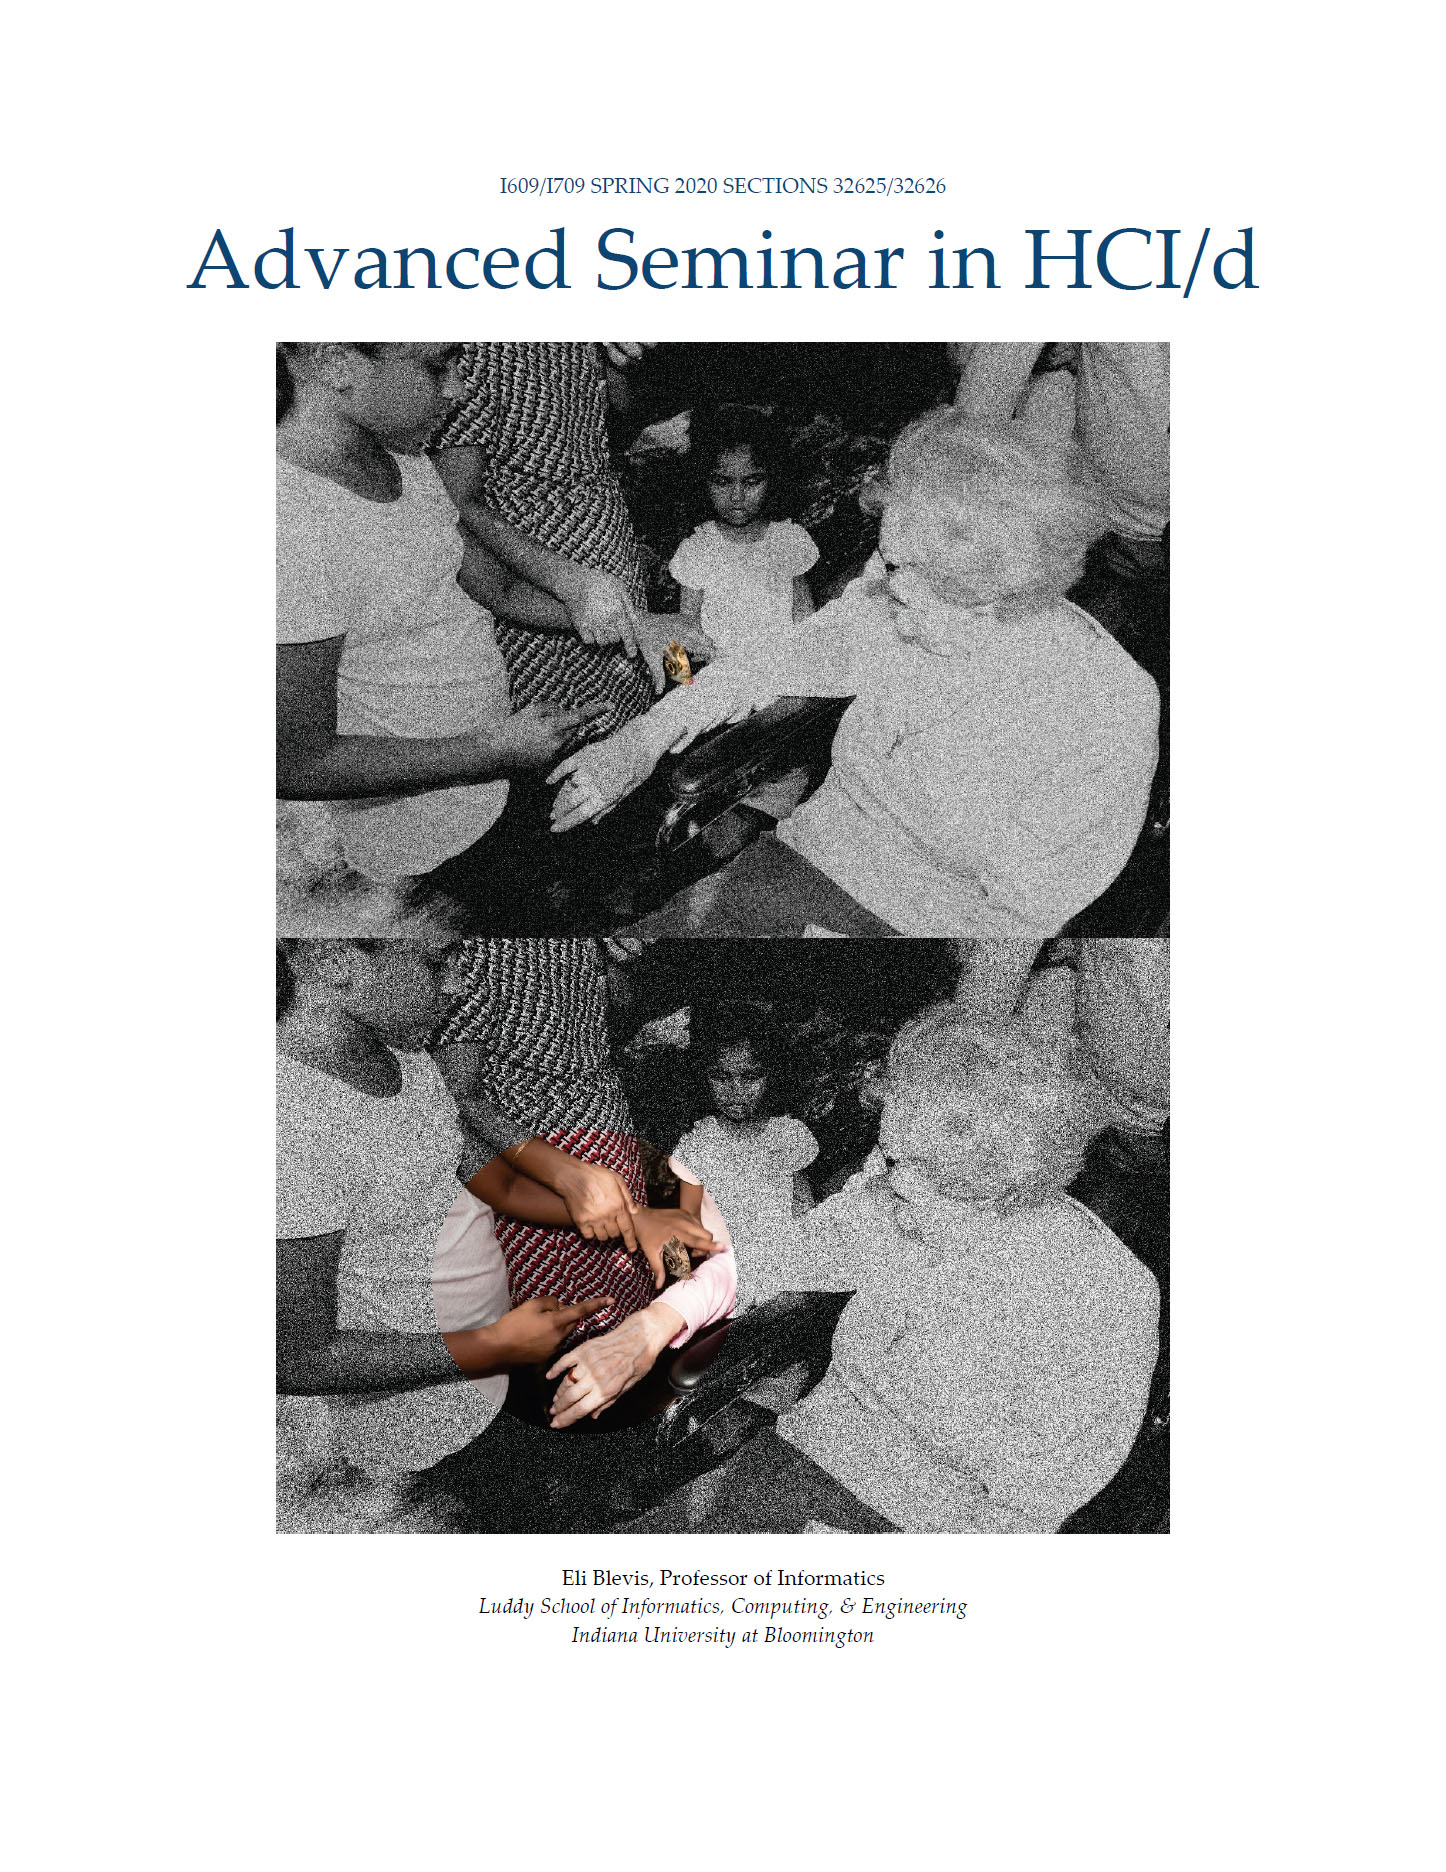 Syllabus: Advanced Seminar in HCI/d